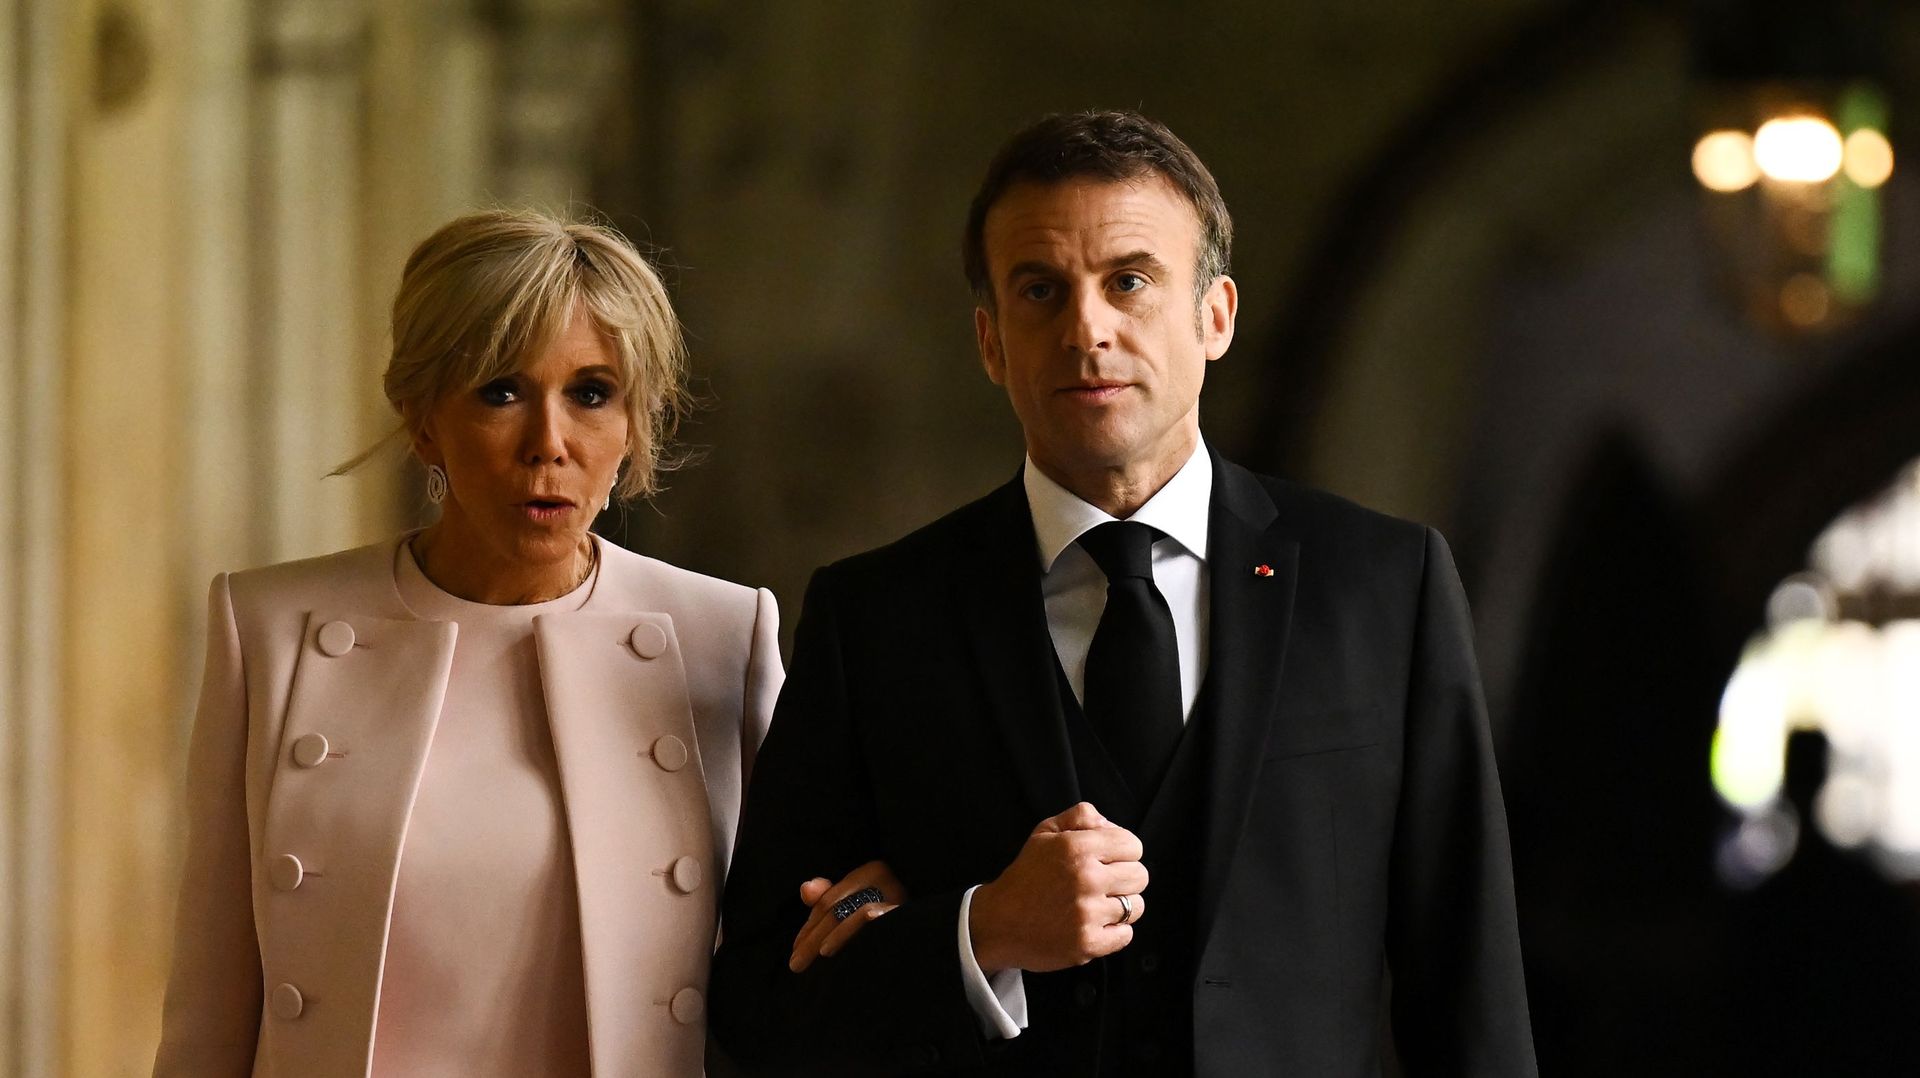 Brigitte et Emmanuel Macron.